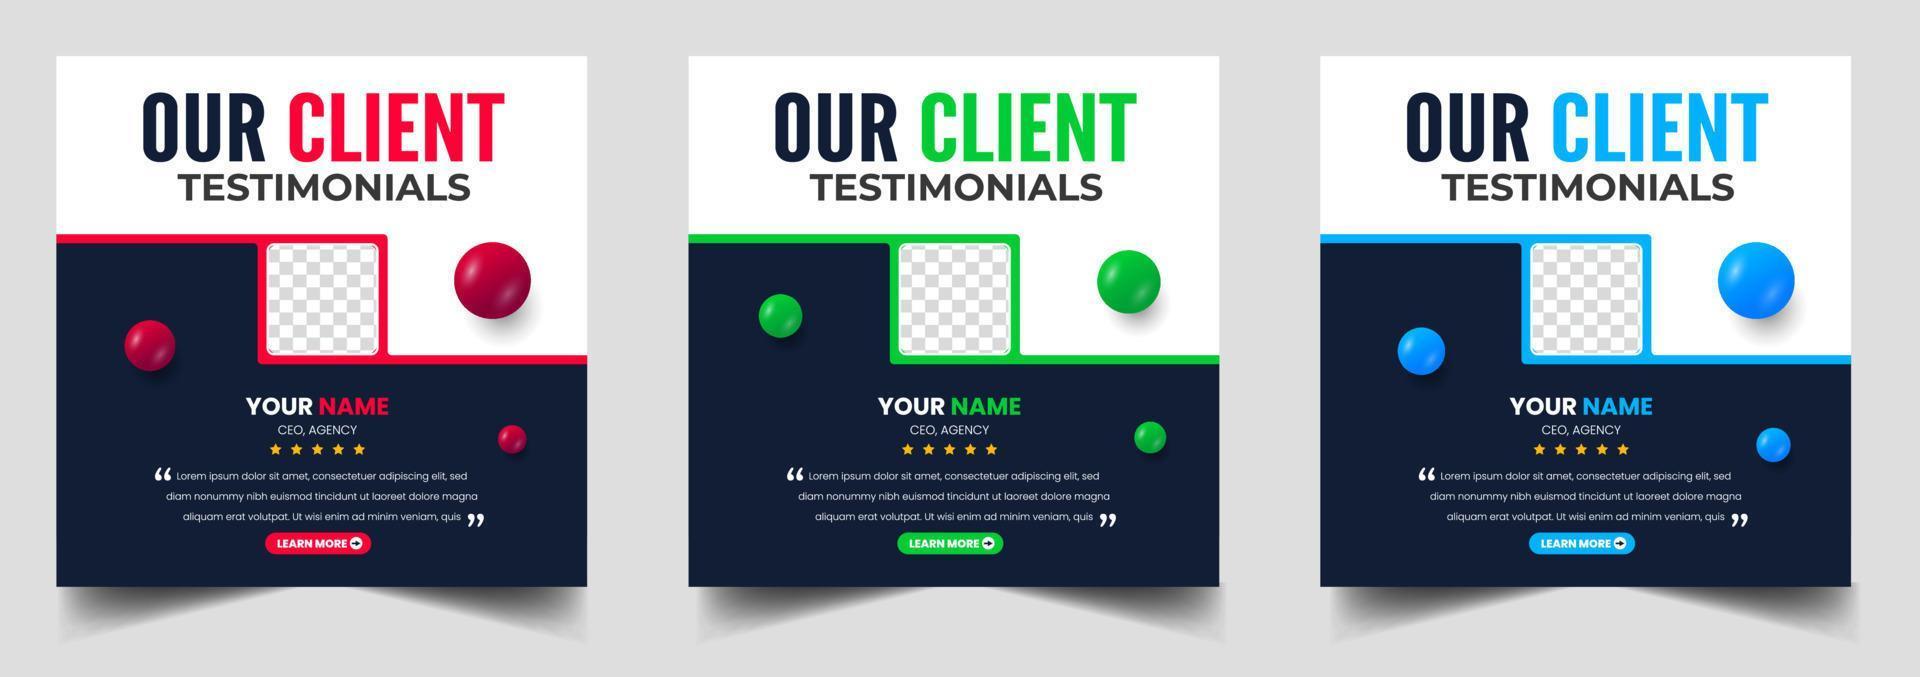 Customer feedback testimonial social media post web banner template. client testimonials social media post banner design template with red, green and blue color. vector